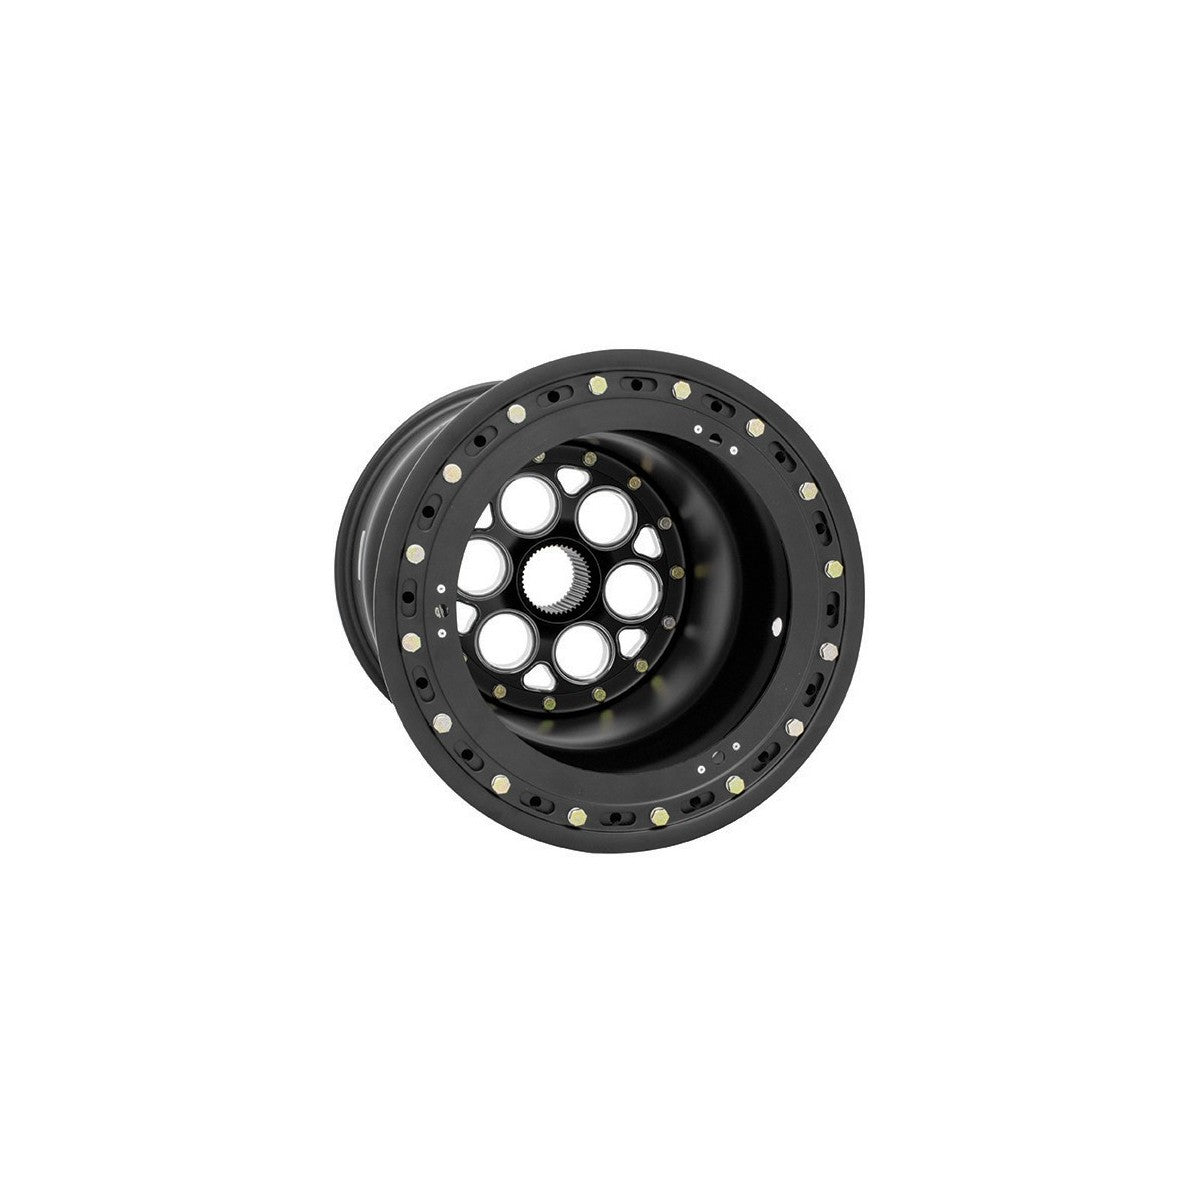 Weld 735B-51656-6 Magnum Sprint Wheel 15x16 42-Spline ET0 BS6 Black Center - Polished Shell